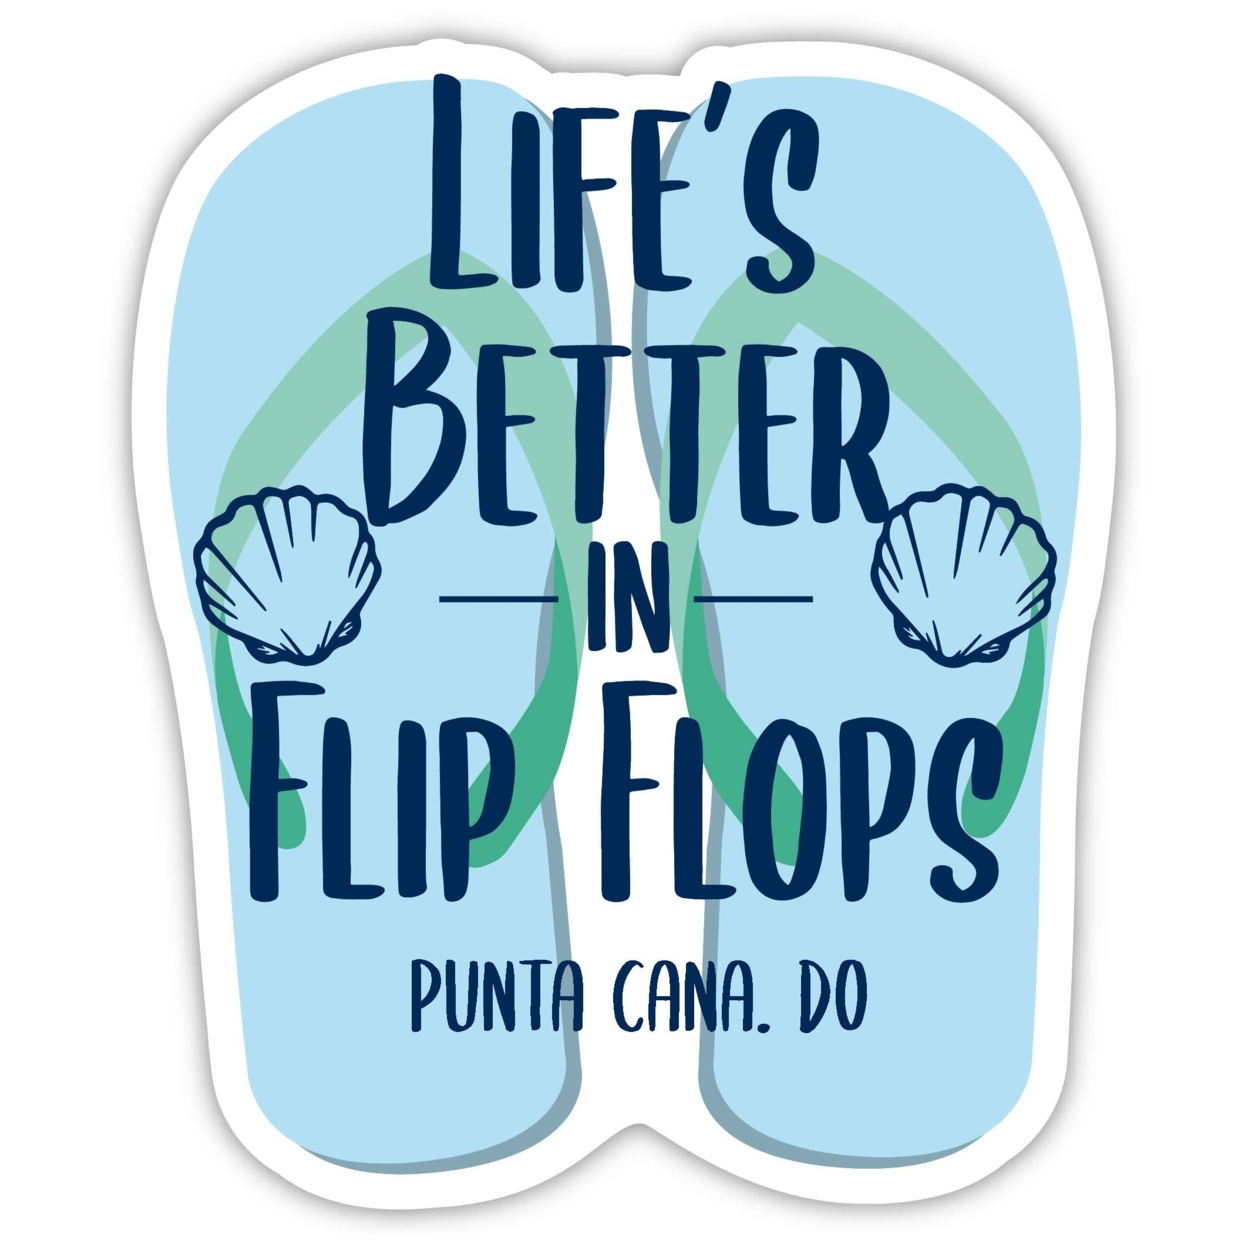 Punta Cana Dominican Republic Souvenir 4 Inch Vinyl Decal Sticker Flip Flop Design